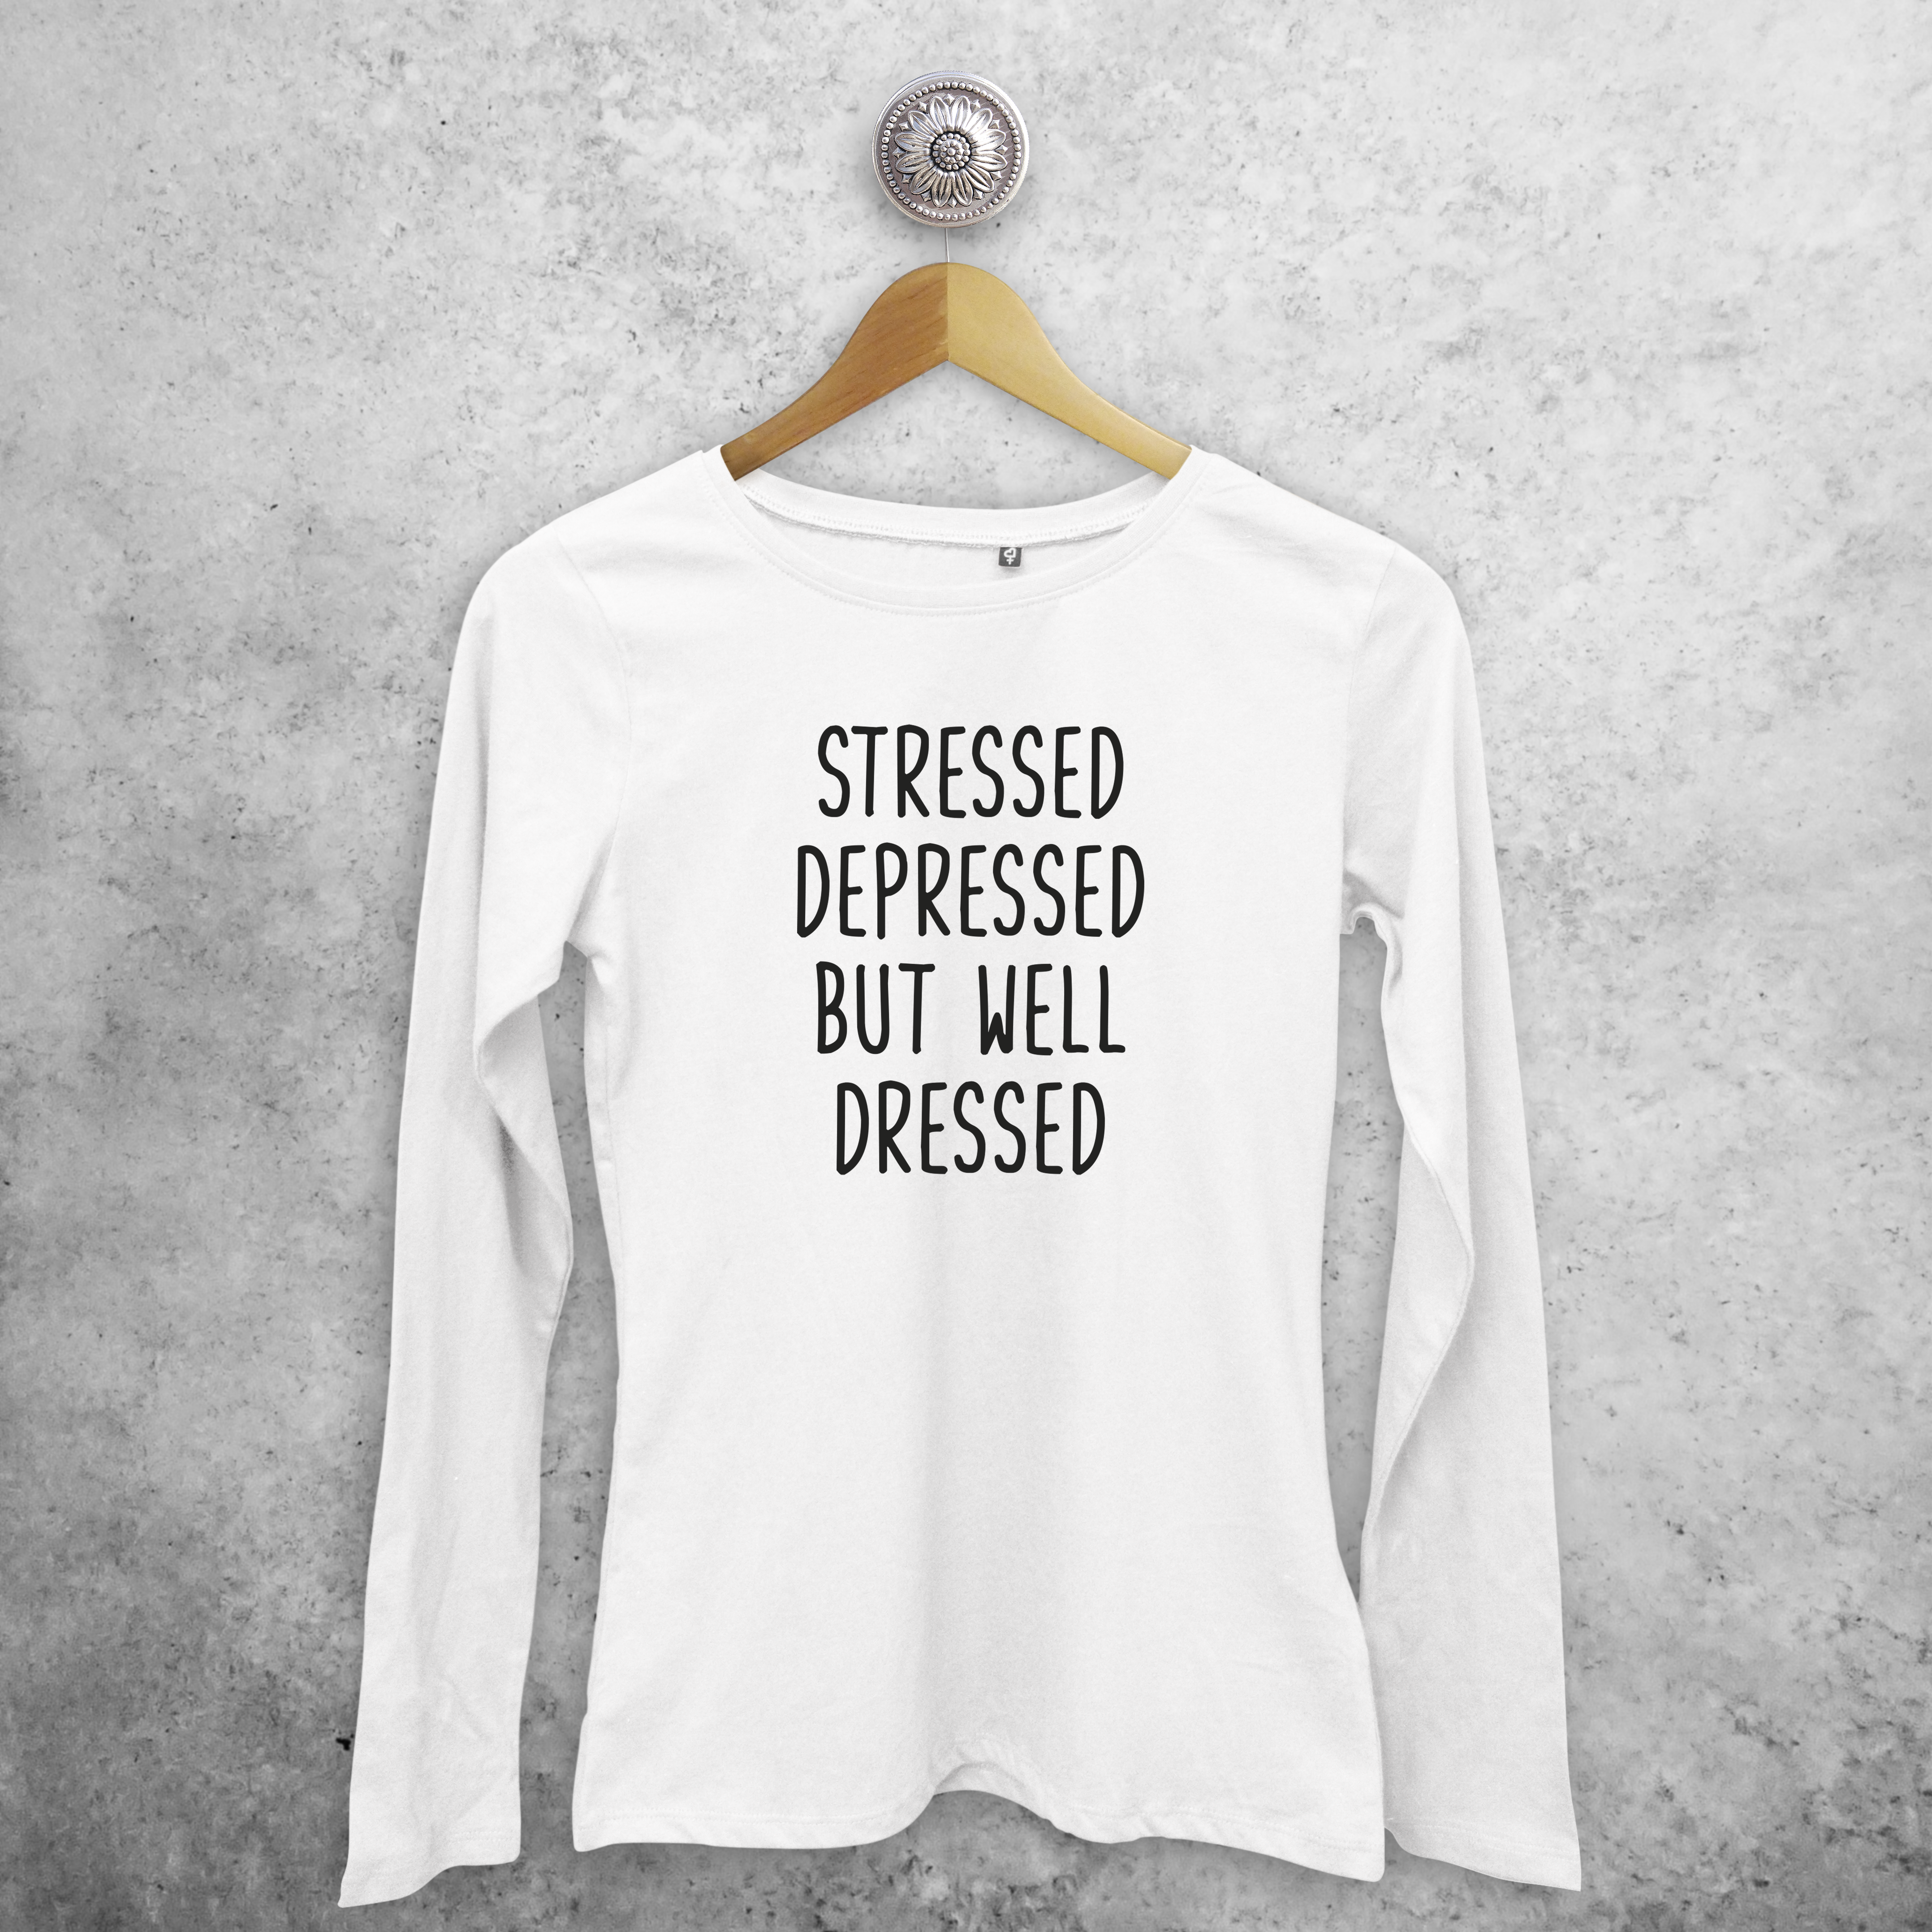 'Stressed, depressed, but well dressed' volwassene shirt met lange mouwen